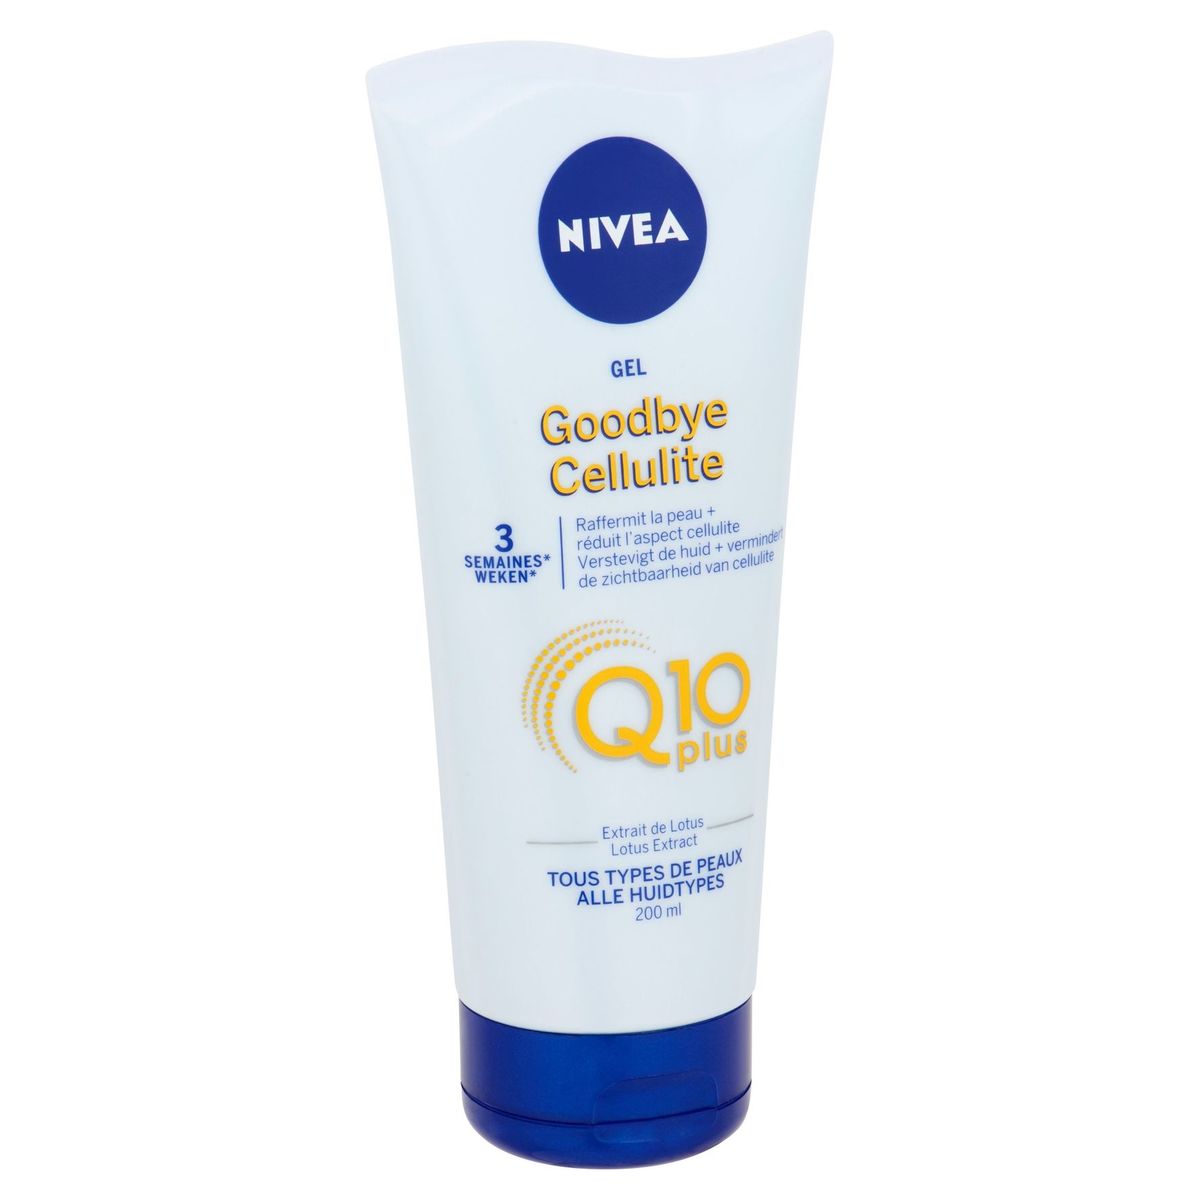 Nivea Q10 Plus Gel Goodbye Cellulite Lotus Extract 200 ml